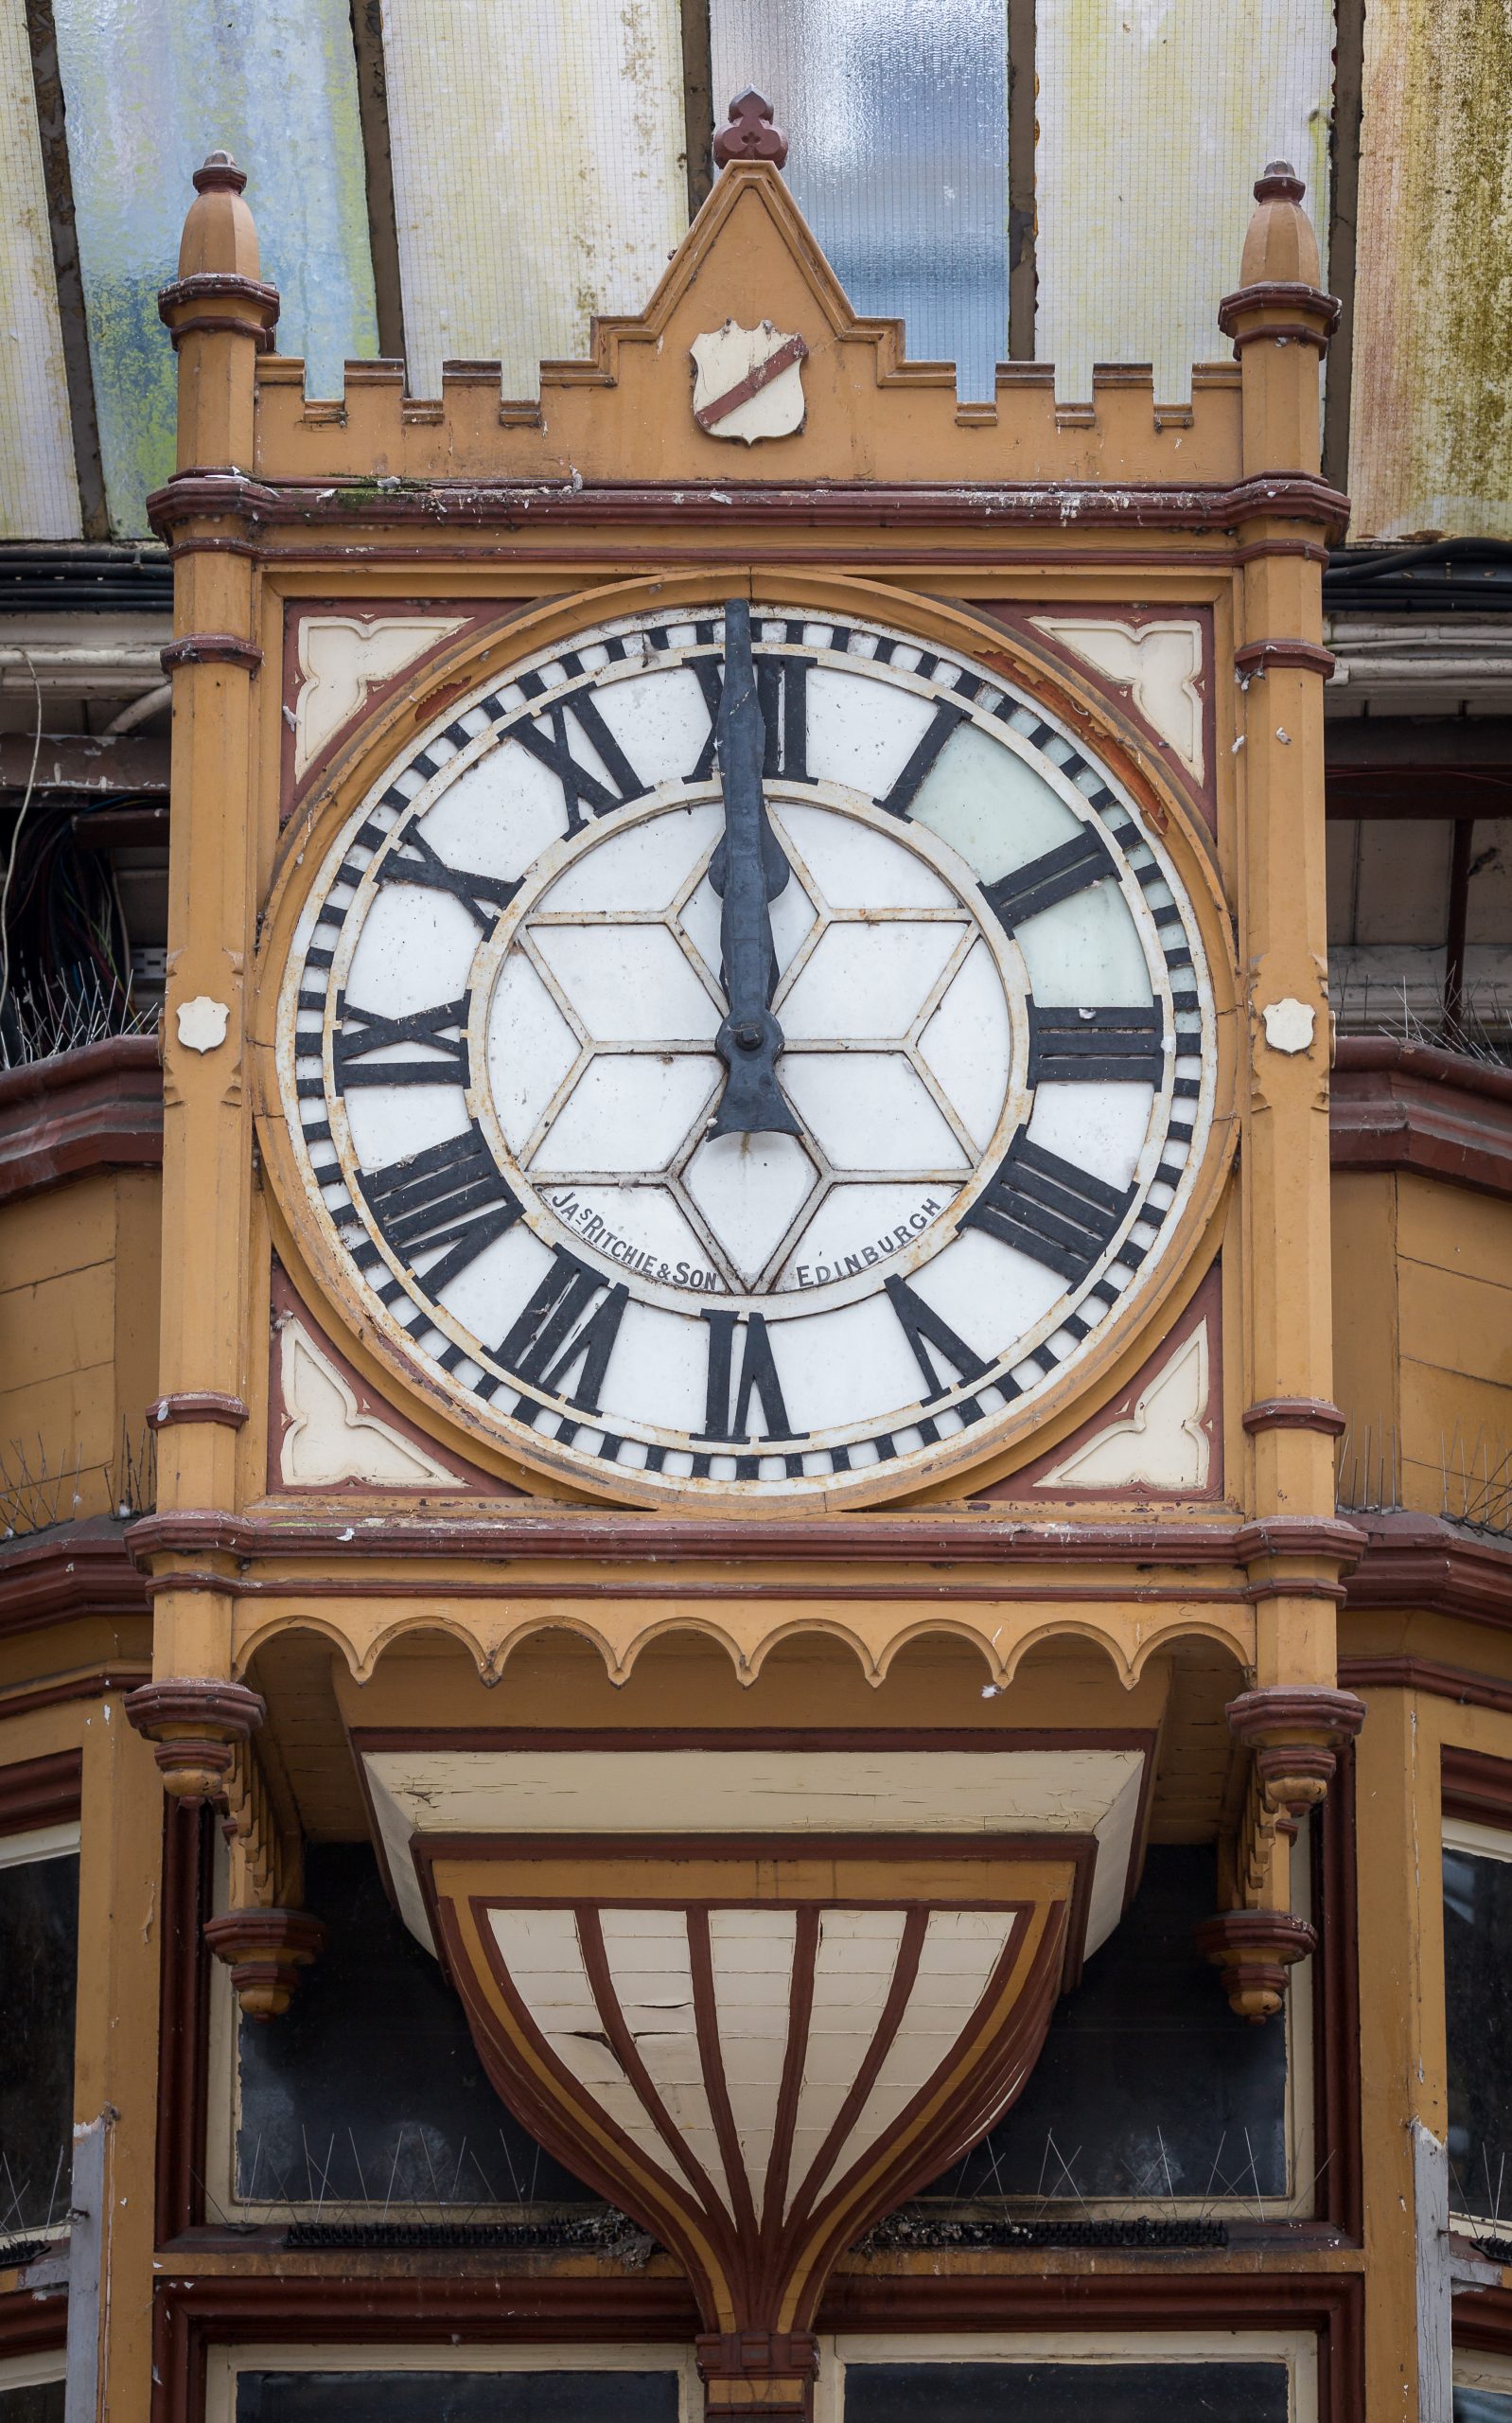 Railway Station – Clocks